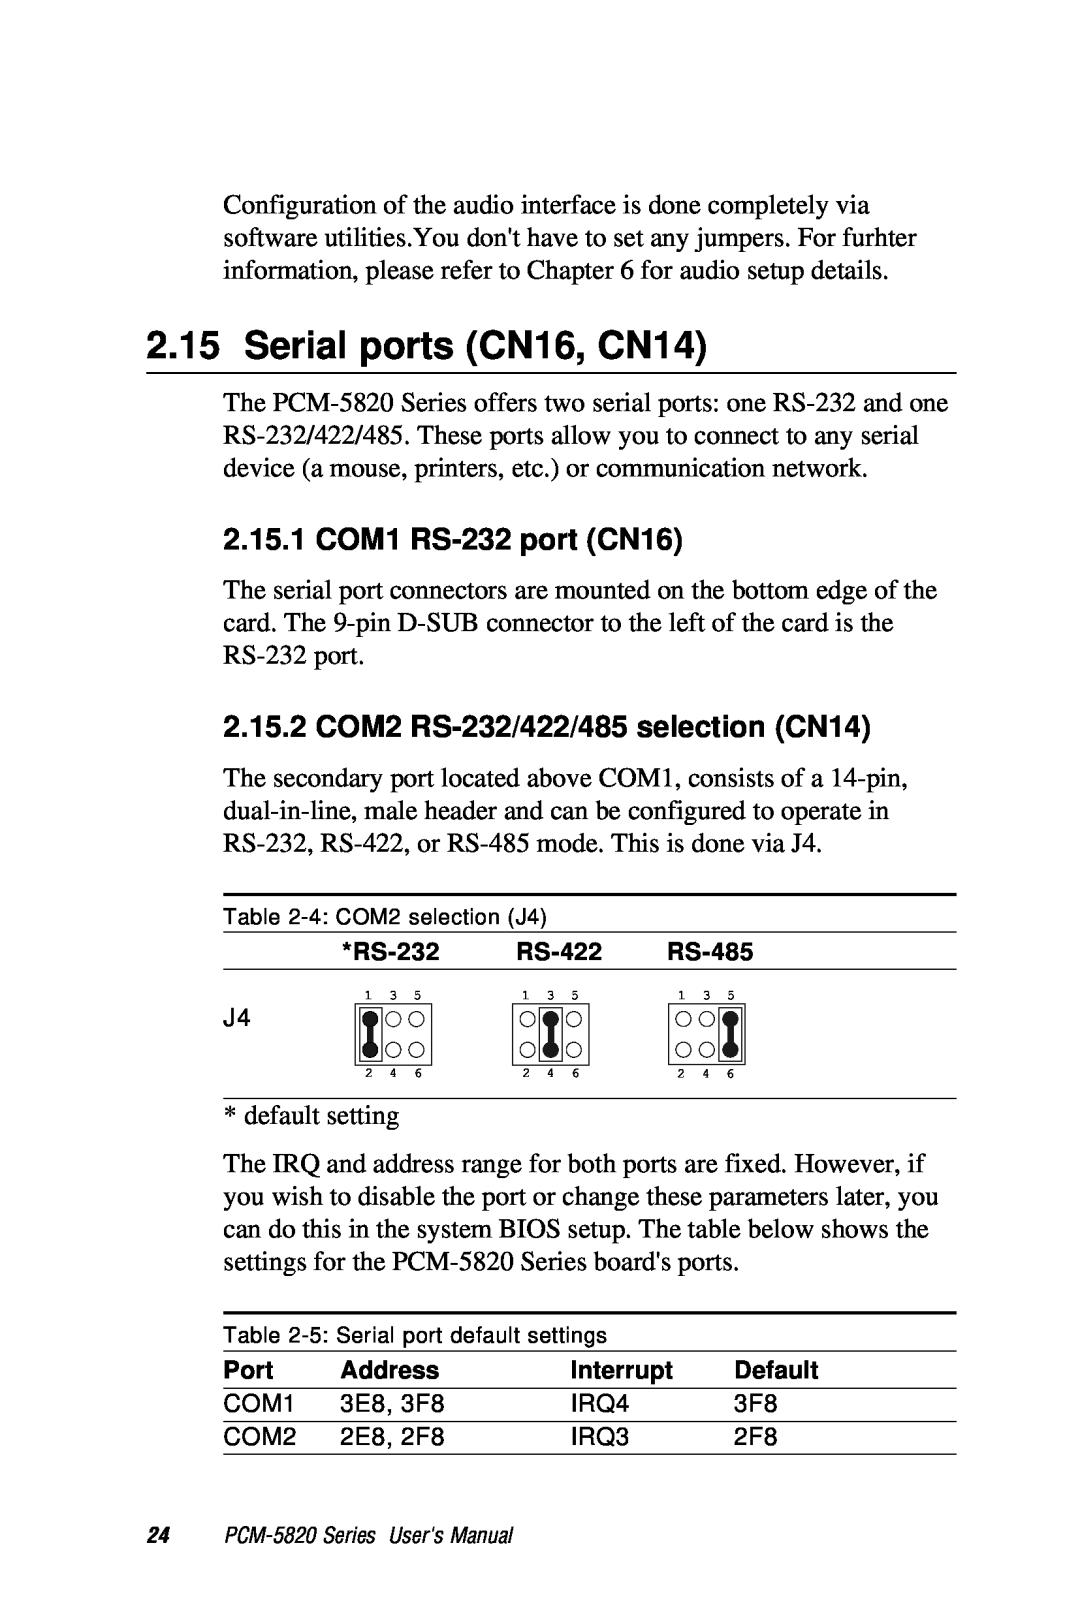 AMD PCM-5820 manual Serial ports CN16, CN14, 2.15.1 COM1 RS-232 port CN16, 2.15.2 COM2 RS-232/422/485 selection CN14 